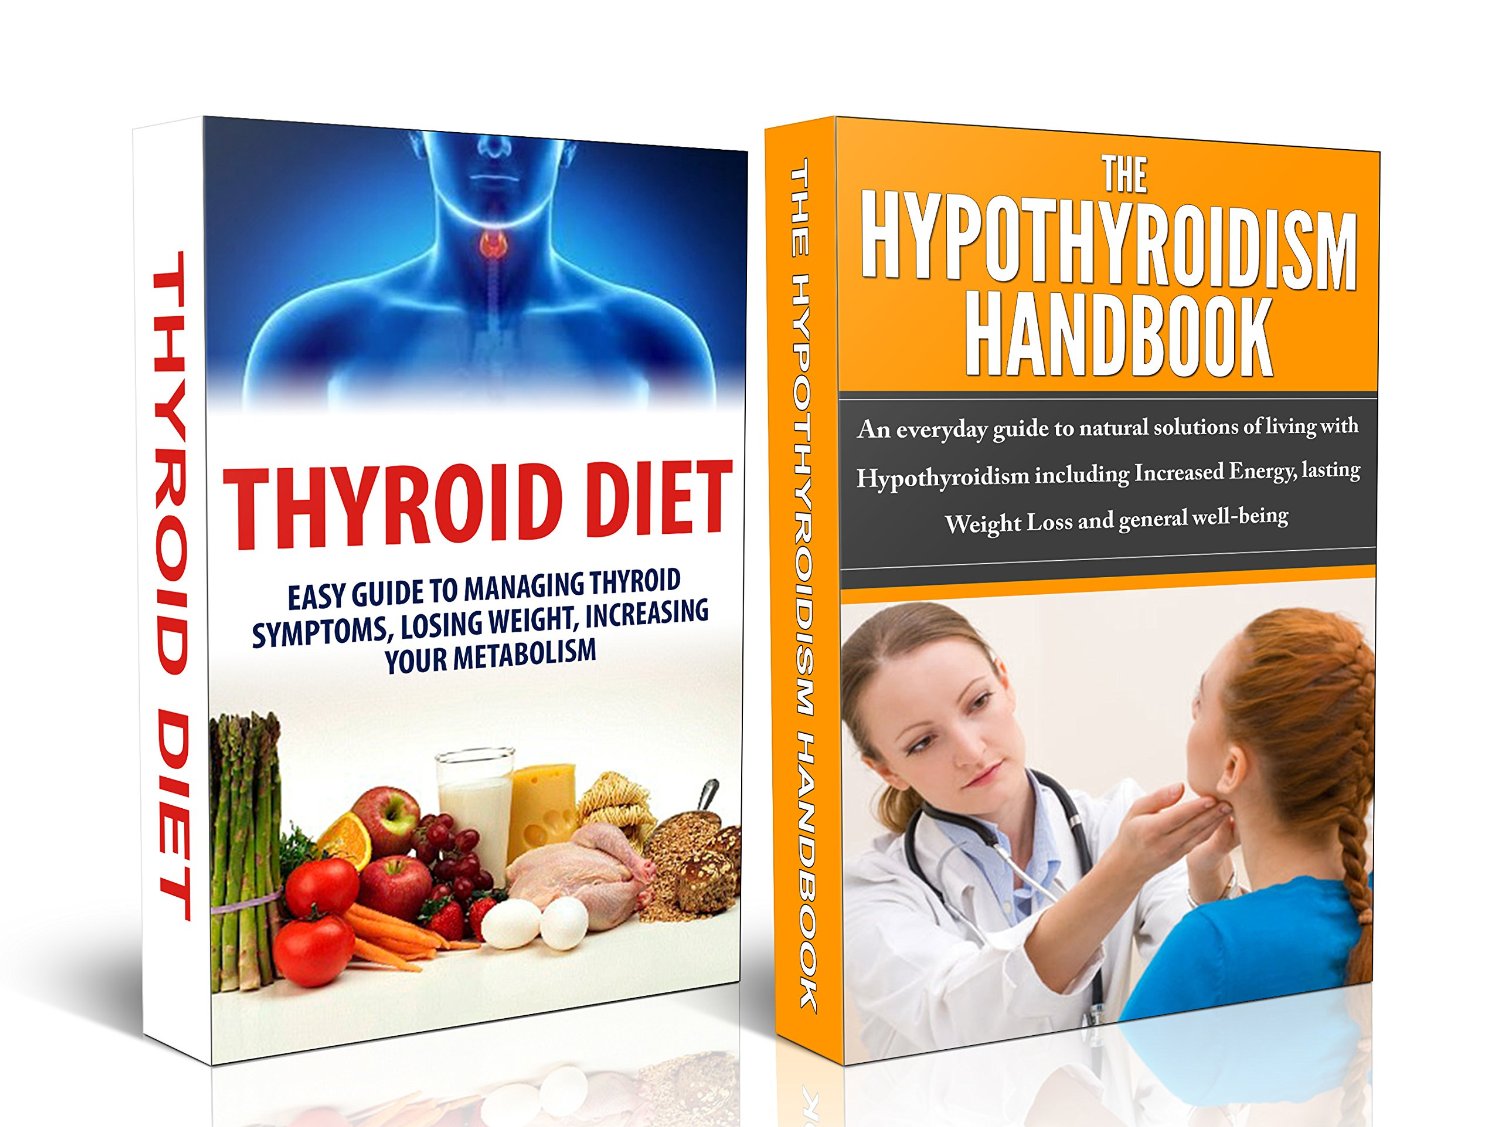 ESSENTIAL OILS BOX SET #16: Thyroid Diet & The Hypothyroidism Handbook (Natural Remedies) by Lindsey P